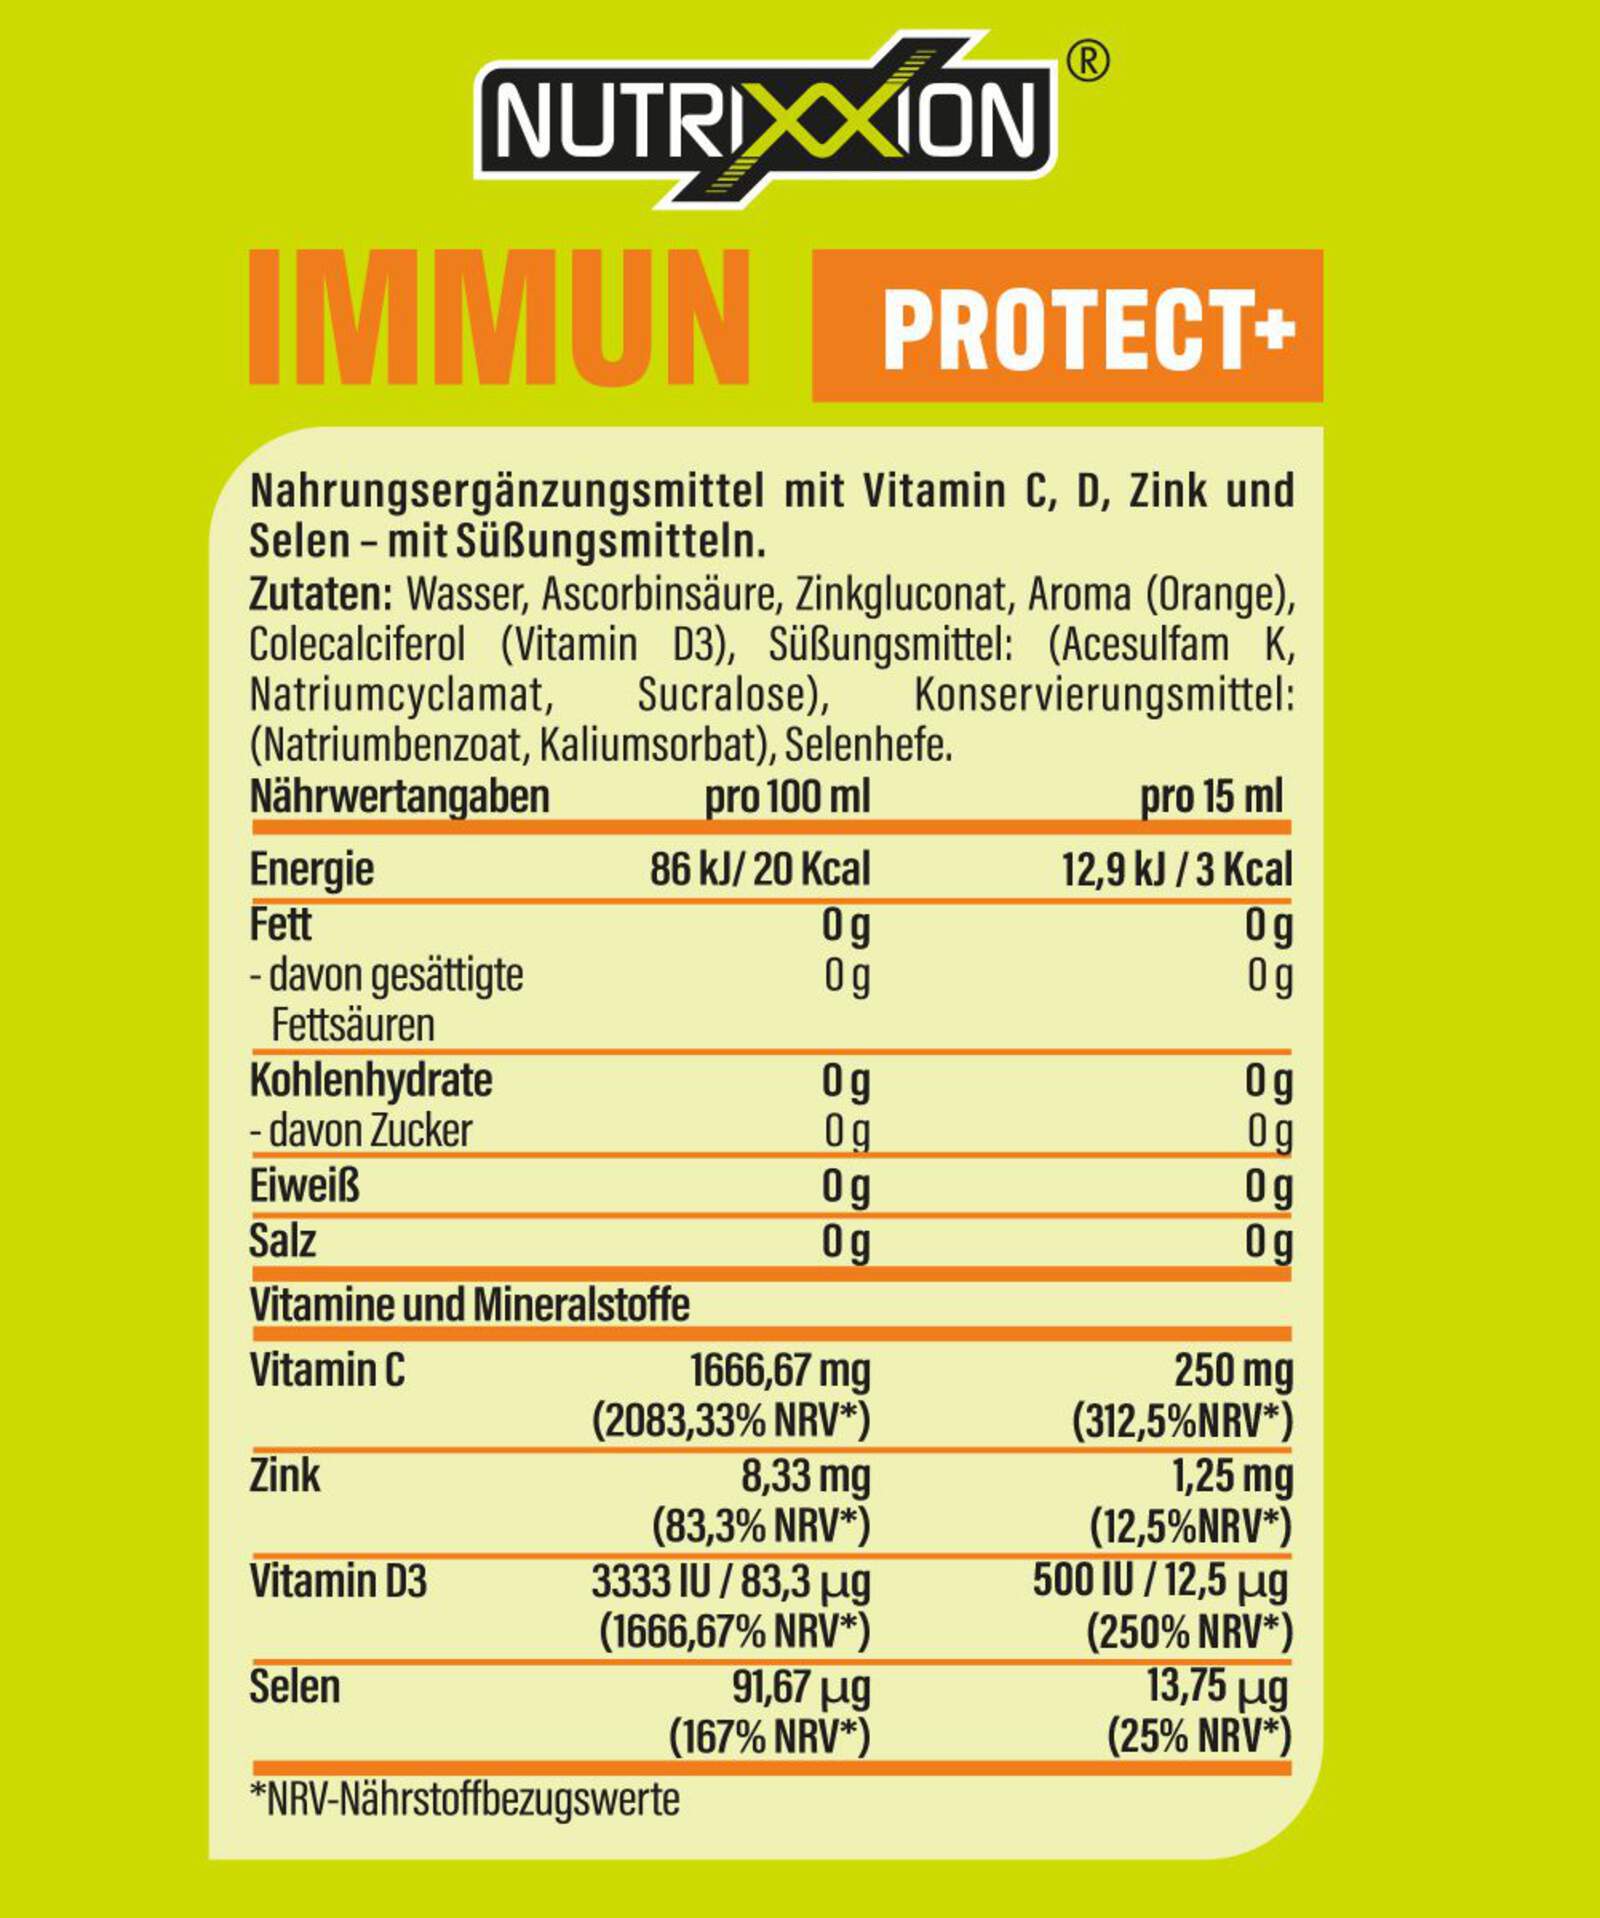 NUTRIXXION IMMUN Protect+ Suplementos